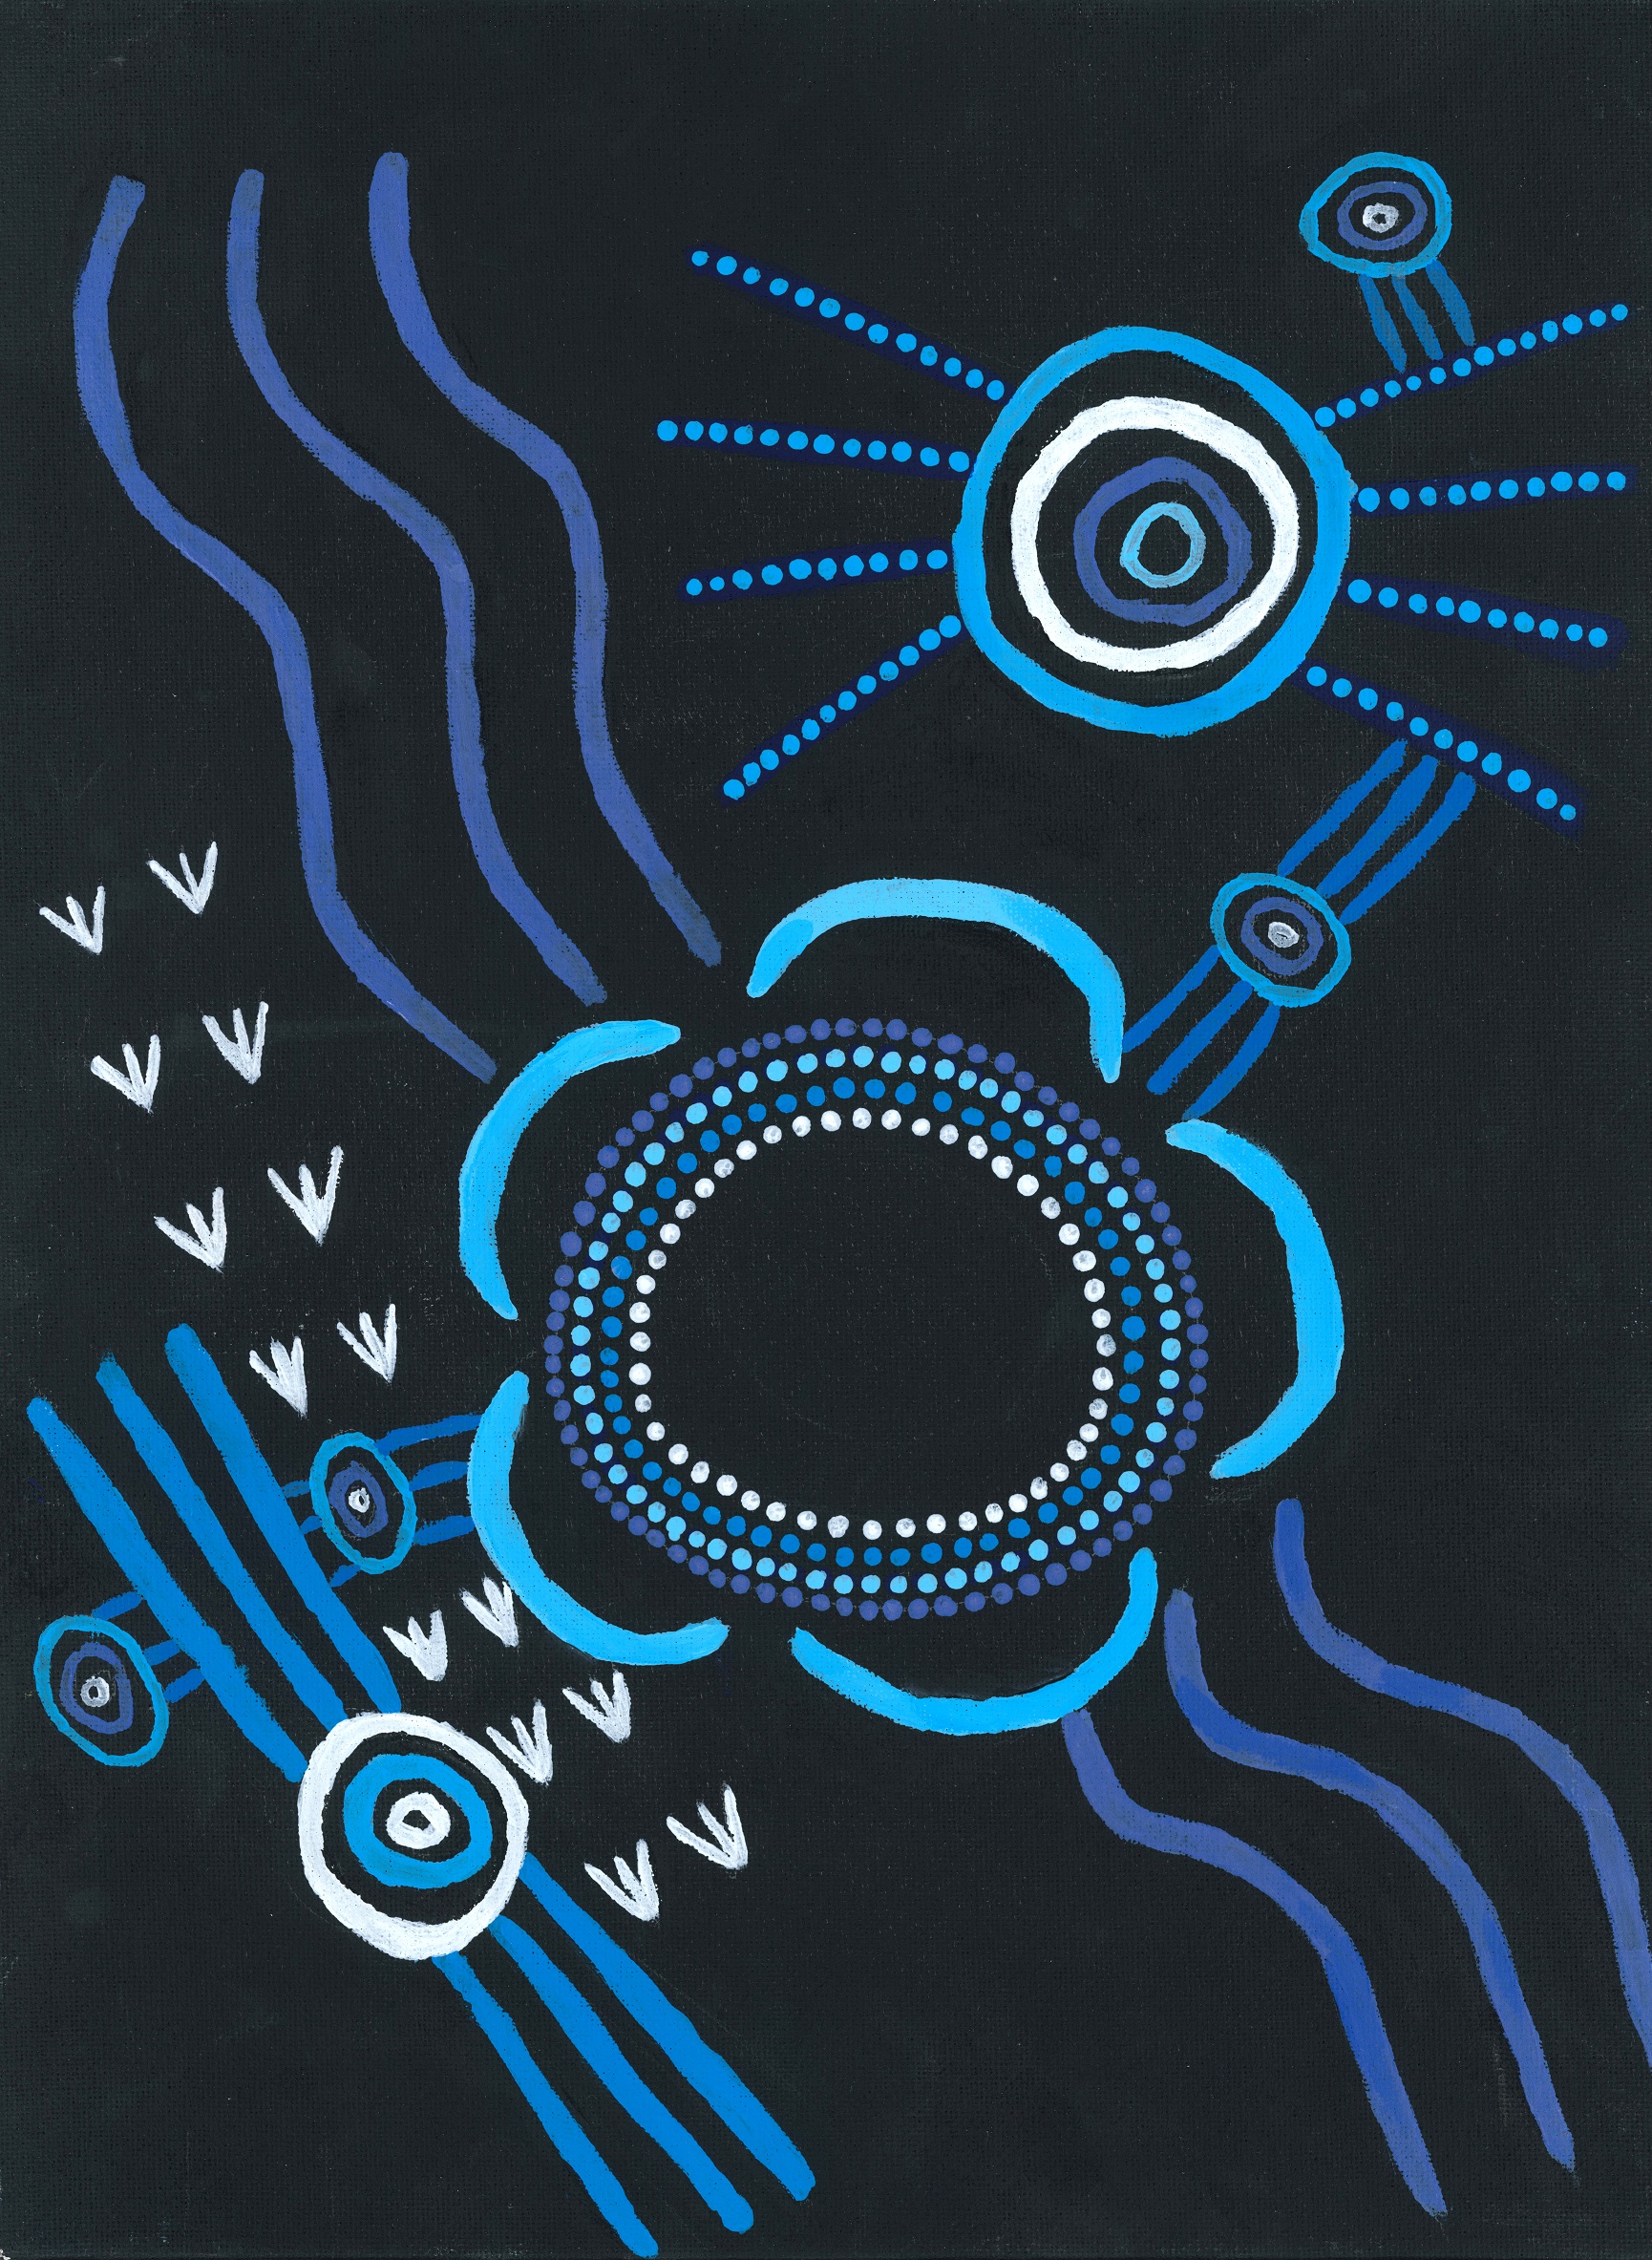 Aboriginal artwork depicting different aboriginal symbols to show distance travelled, cleansing and warding away bad spiritis